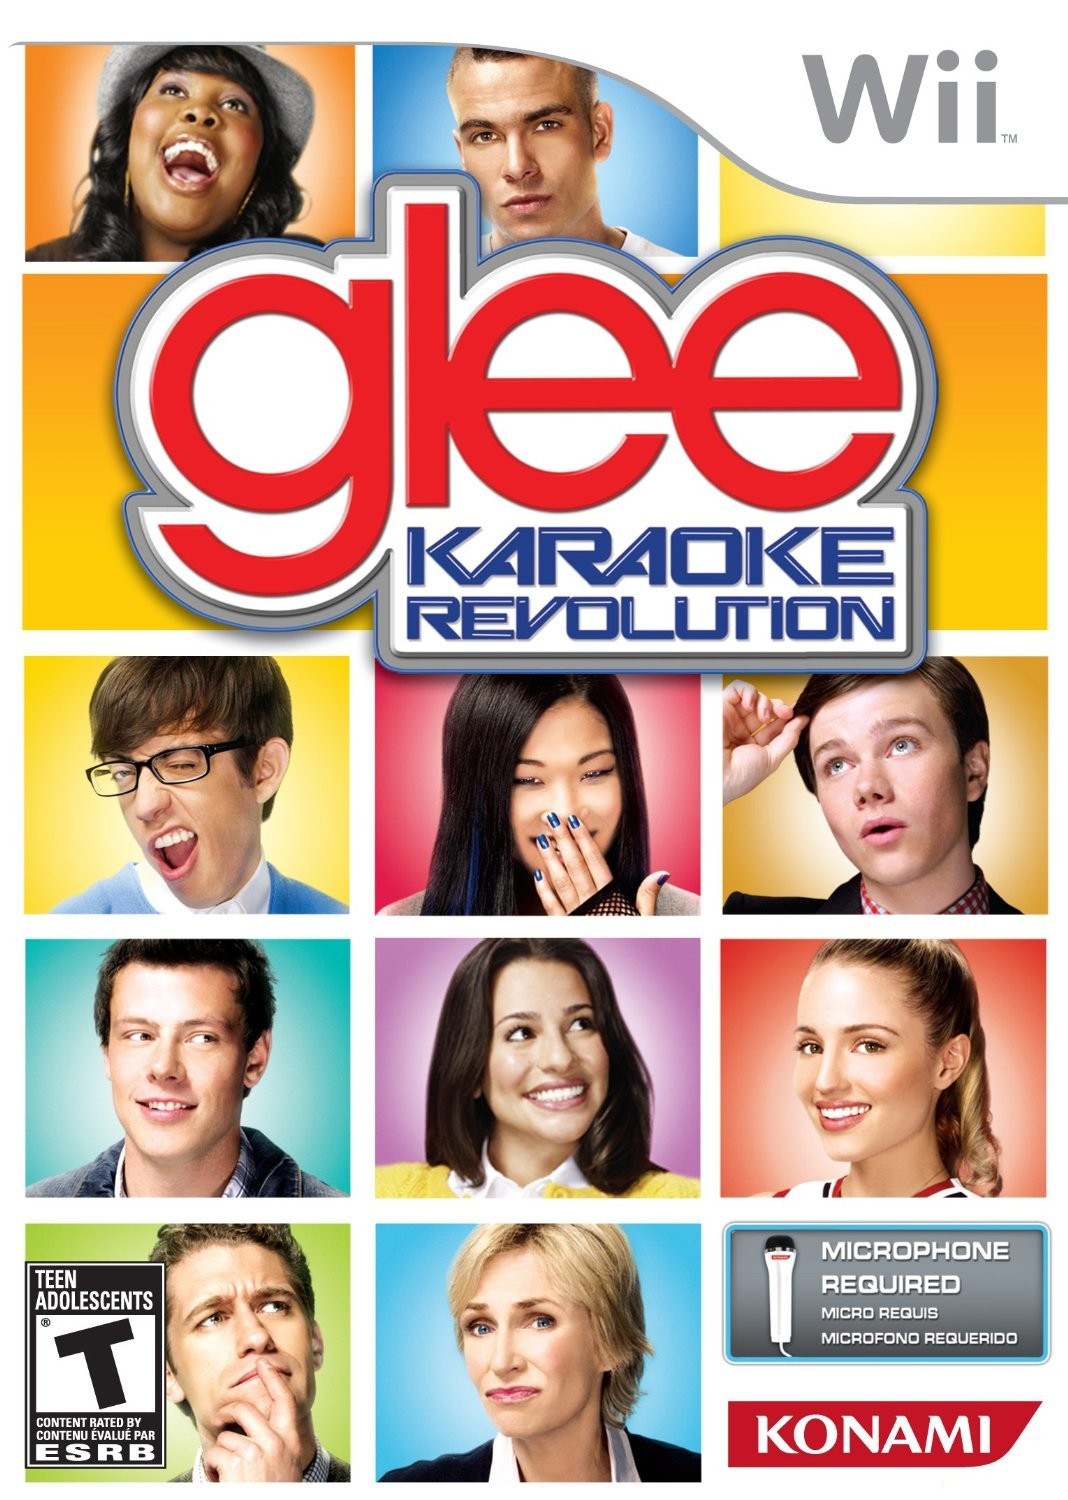 WII Glee Karaoke Revolution - USADO